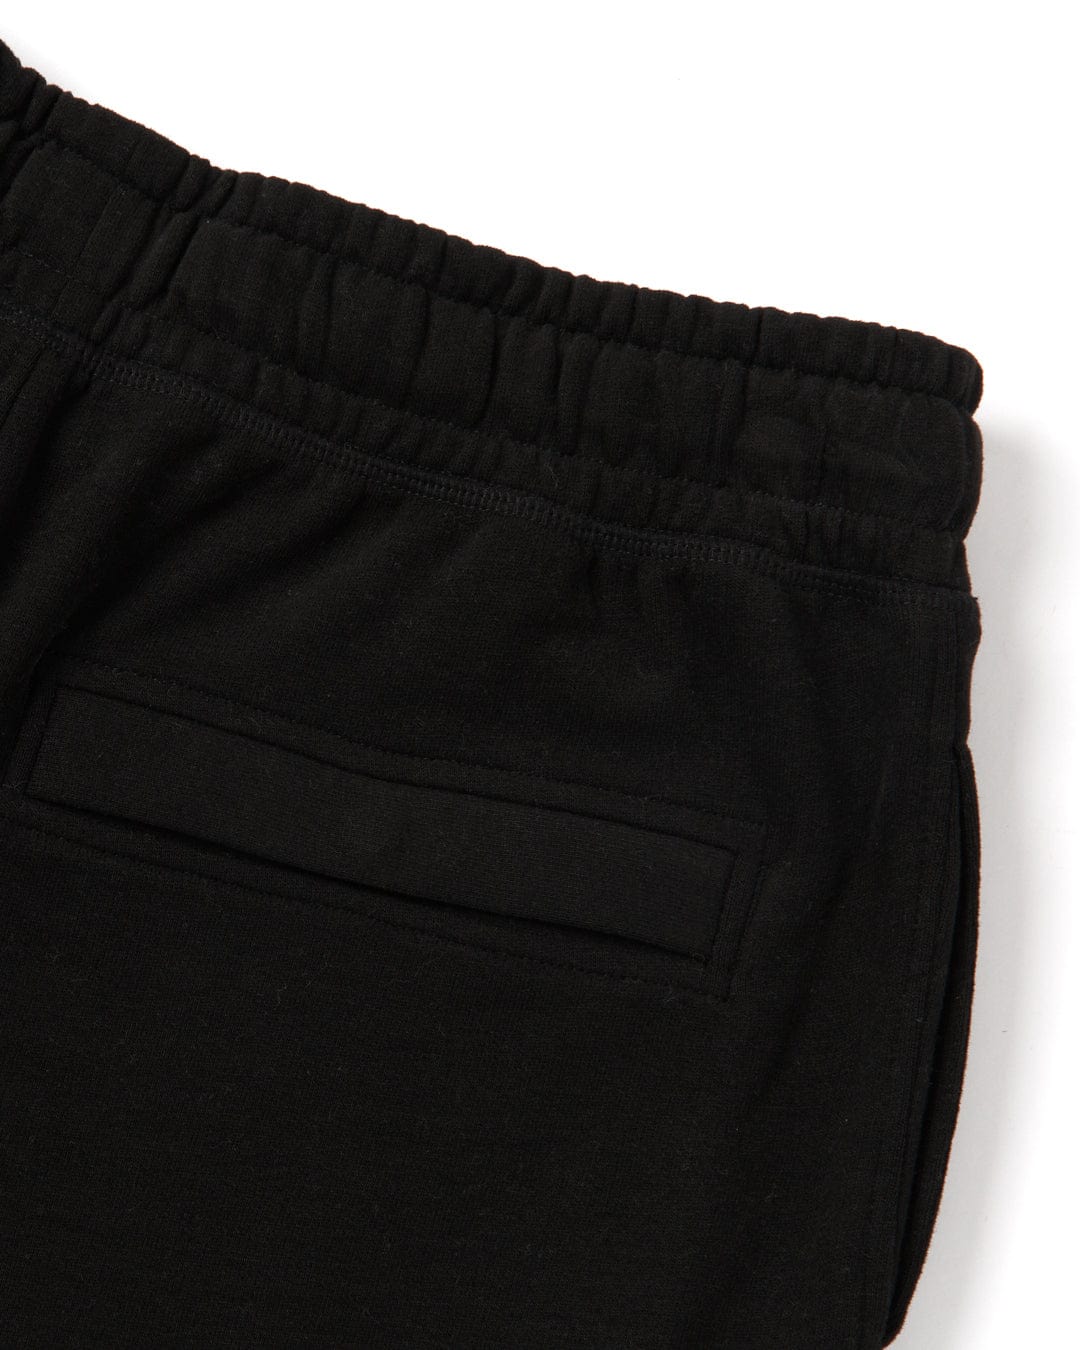 A close-up of Saltrock Original - Mens Short - Black sweatpants with an elasticated waist.